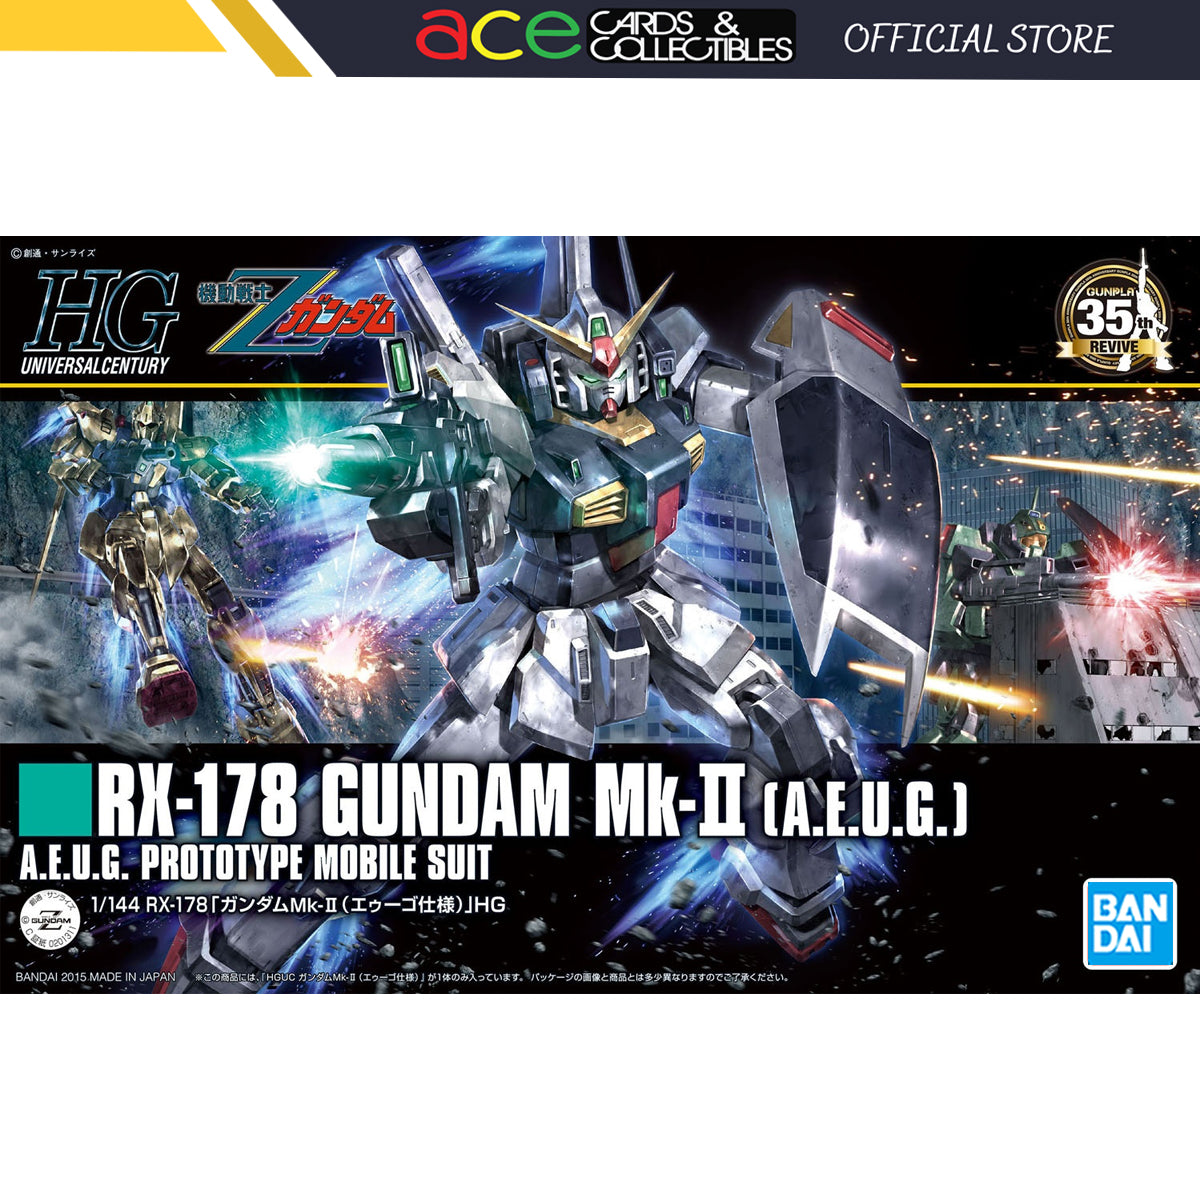 Gunpla 1/144 HGUC Revive RX-178 Gundam Mk-II AEUG Version-Bandai-Ace Cards & Collectibles